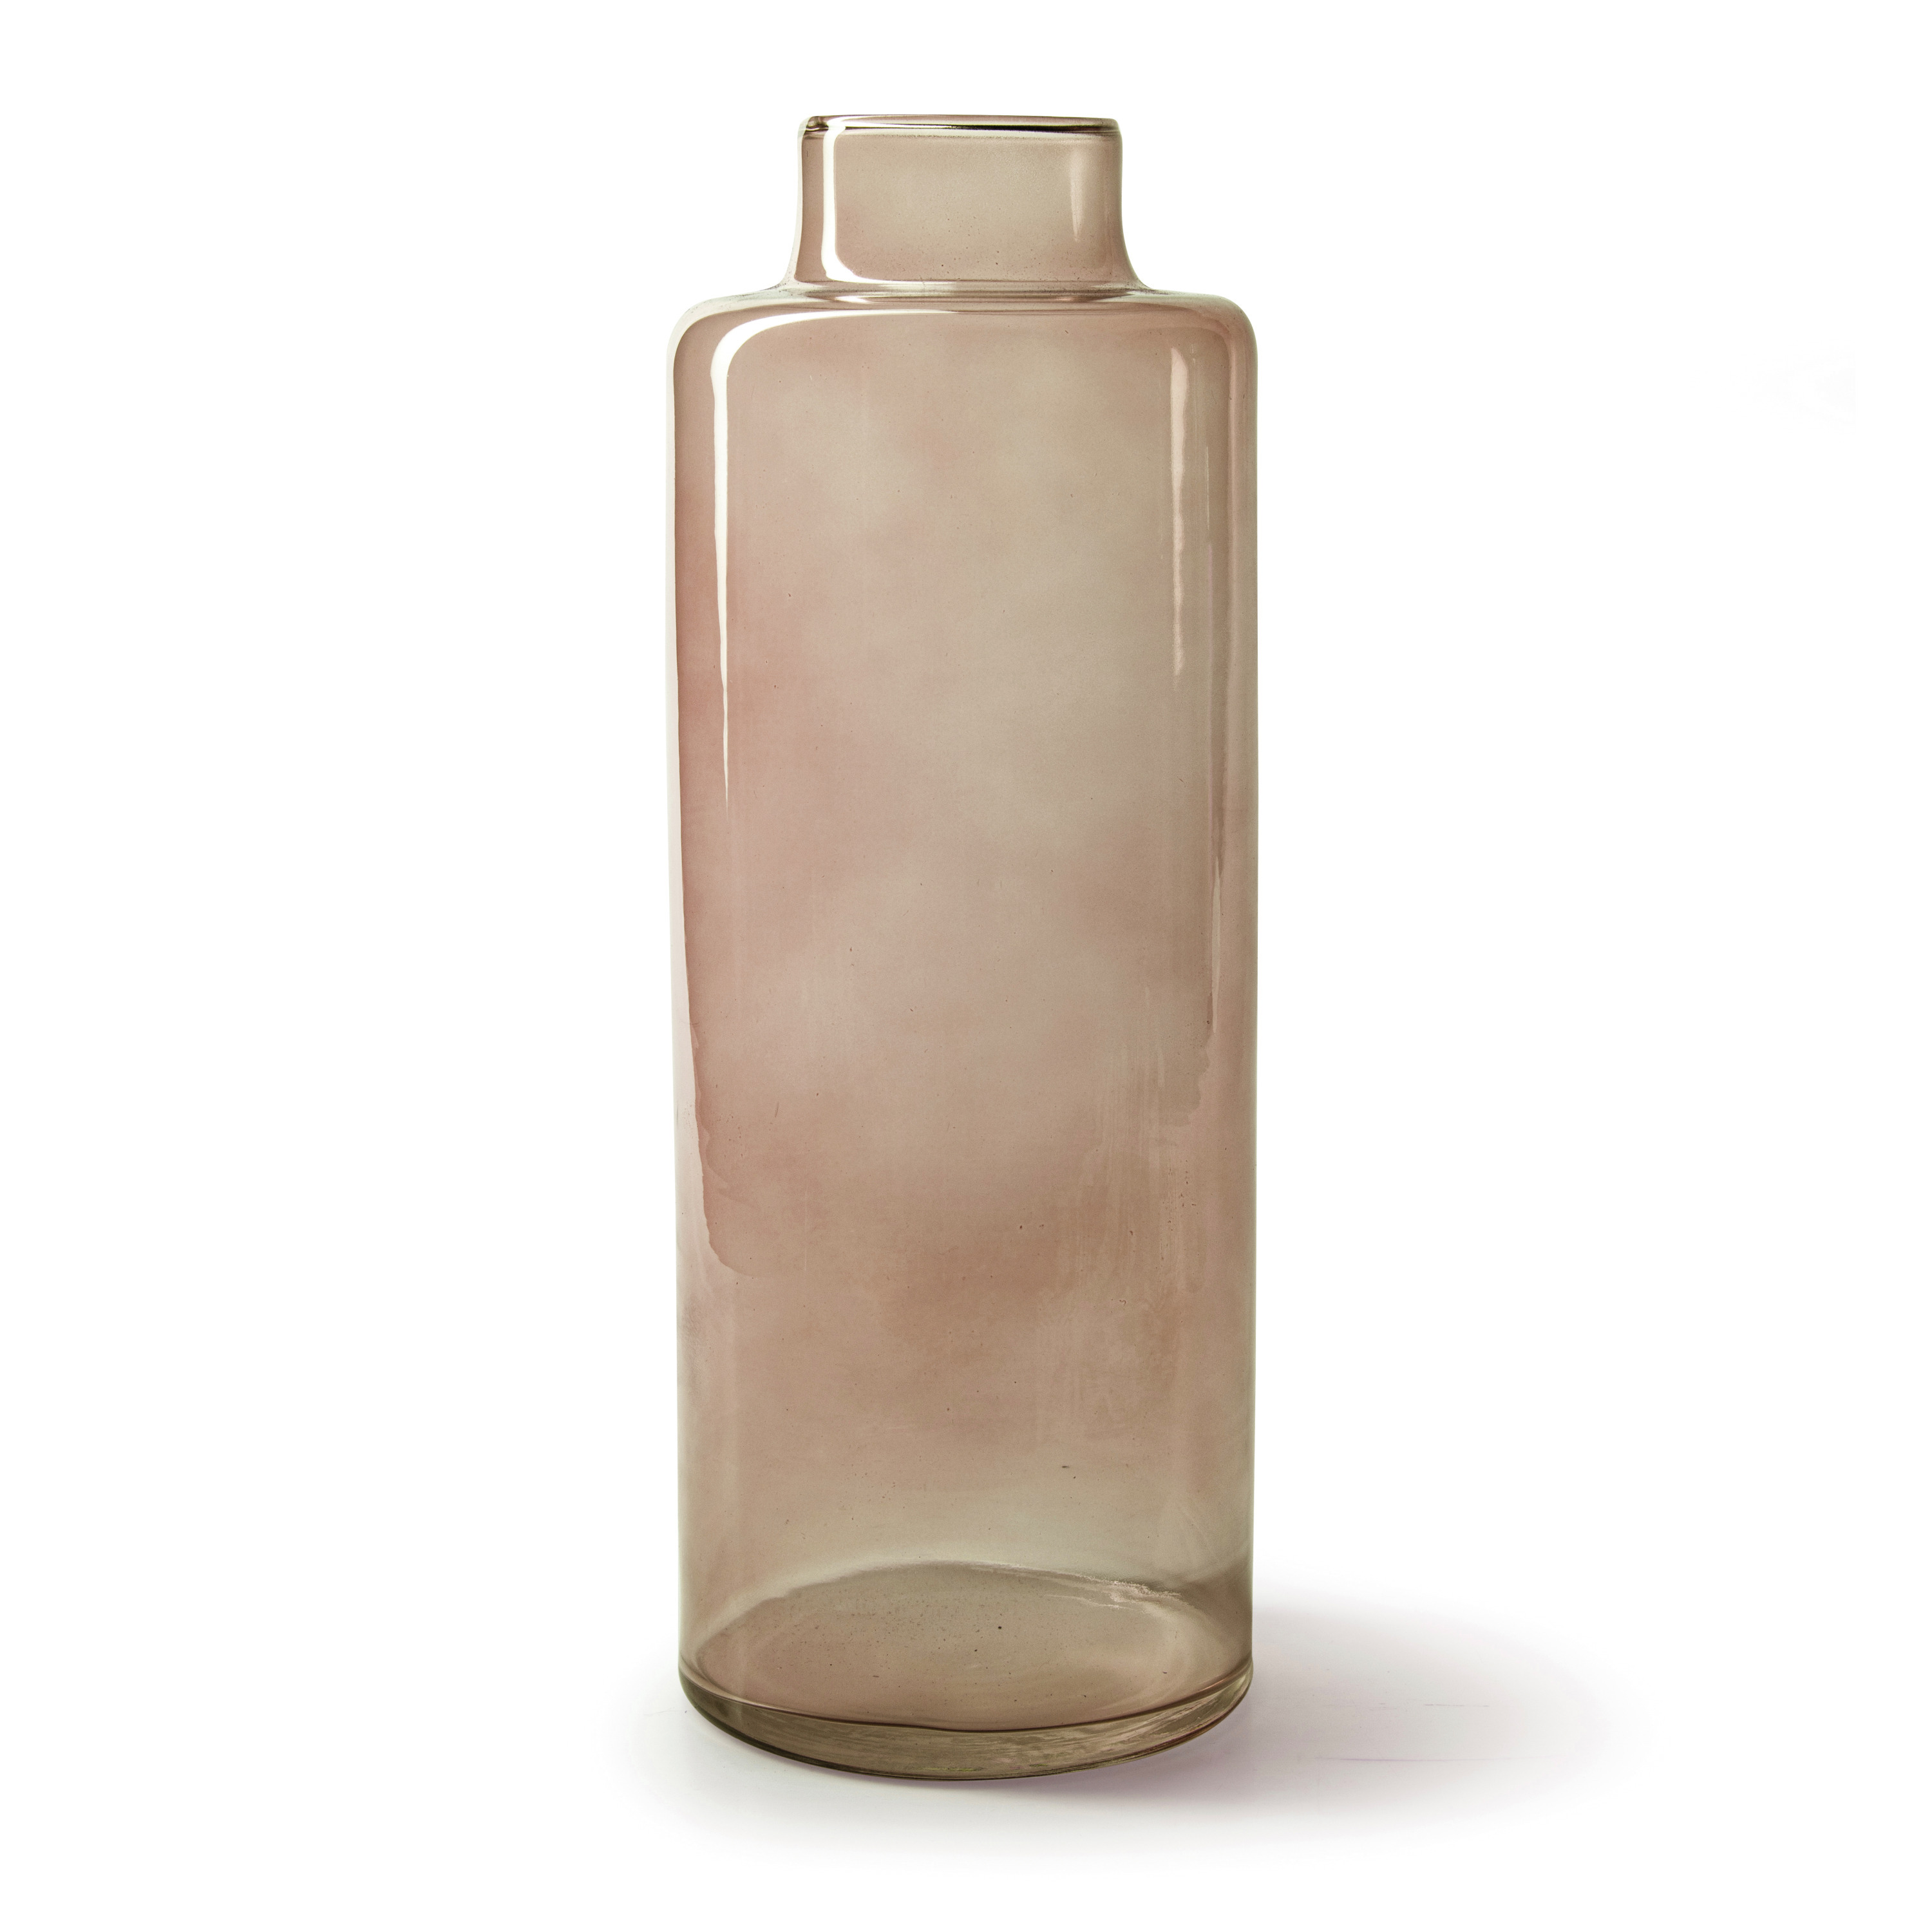 Jodeco Bloemenvaas Willem - transparant beige glas - D11,5 x H32 cm - fles vorm vaas -